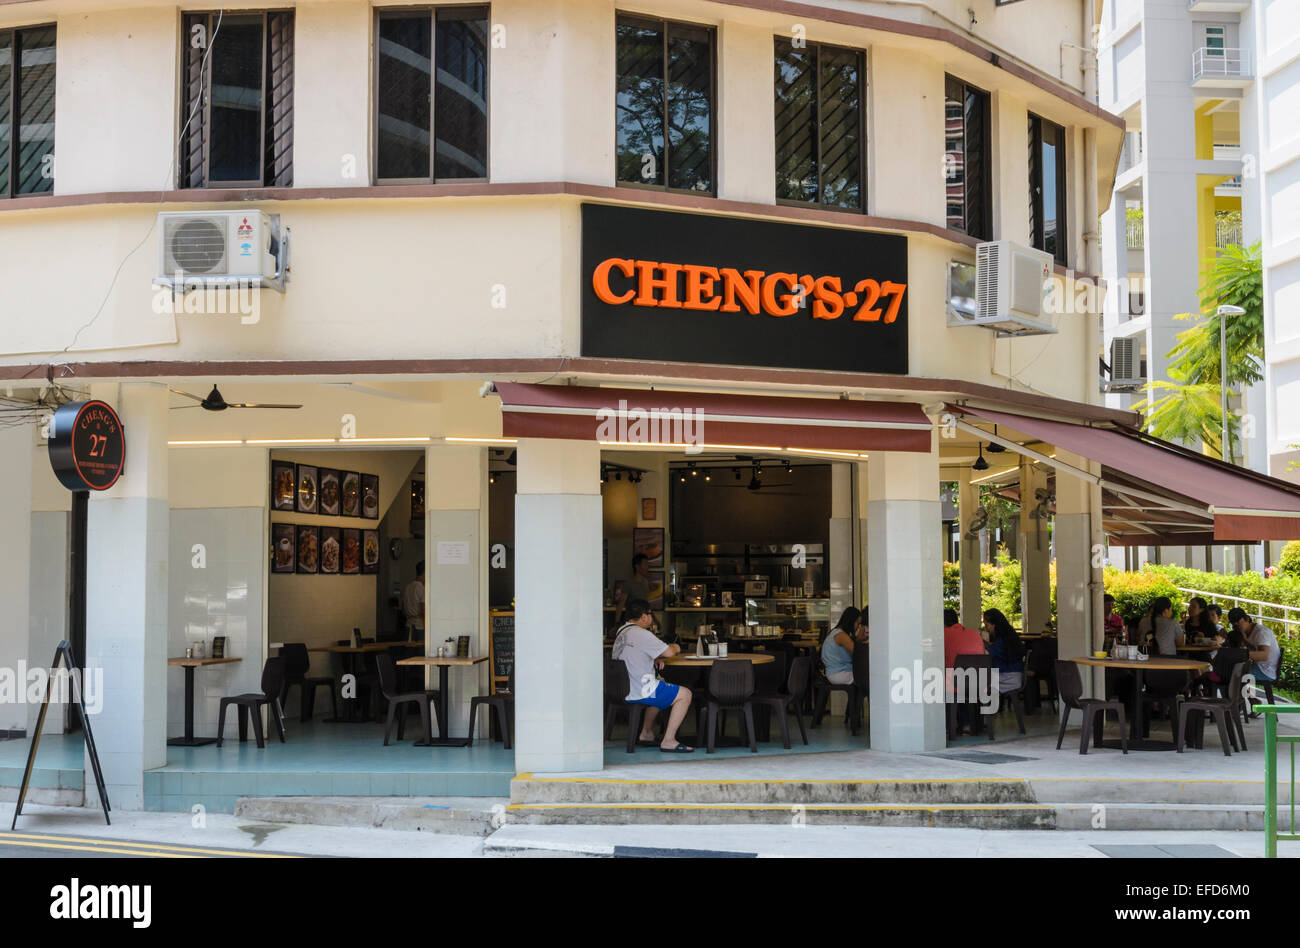 Cheng's 27, a popular Hainanese restaurant in Tiong Bahru Estate, Singapore Stock Photo